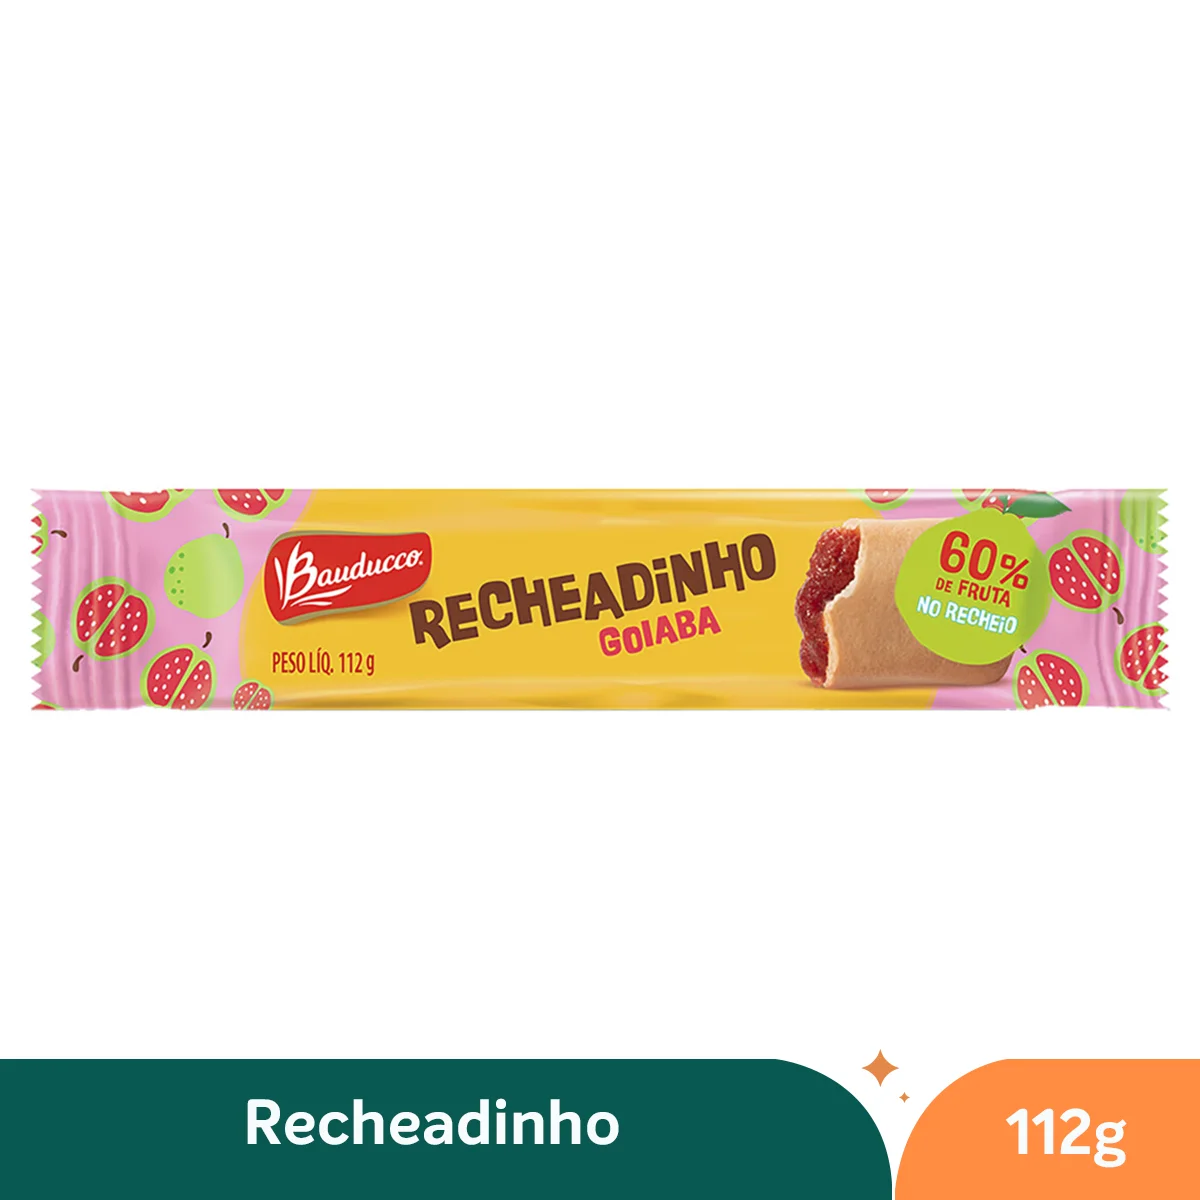 Recheadinho Goiabinha Bauducco - 112g